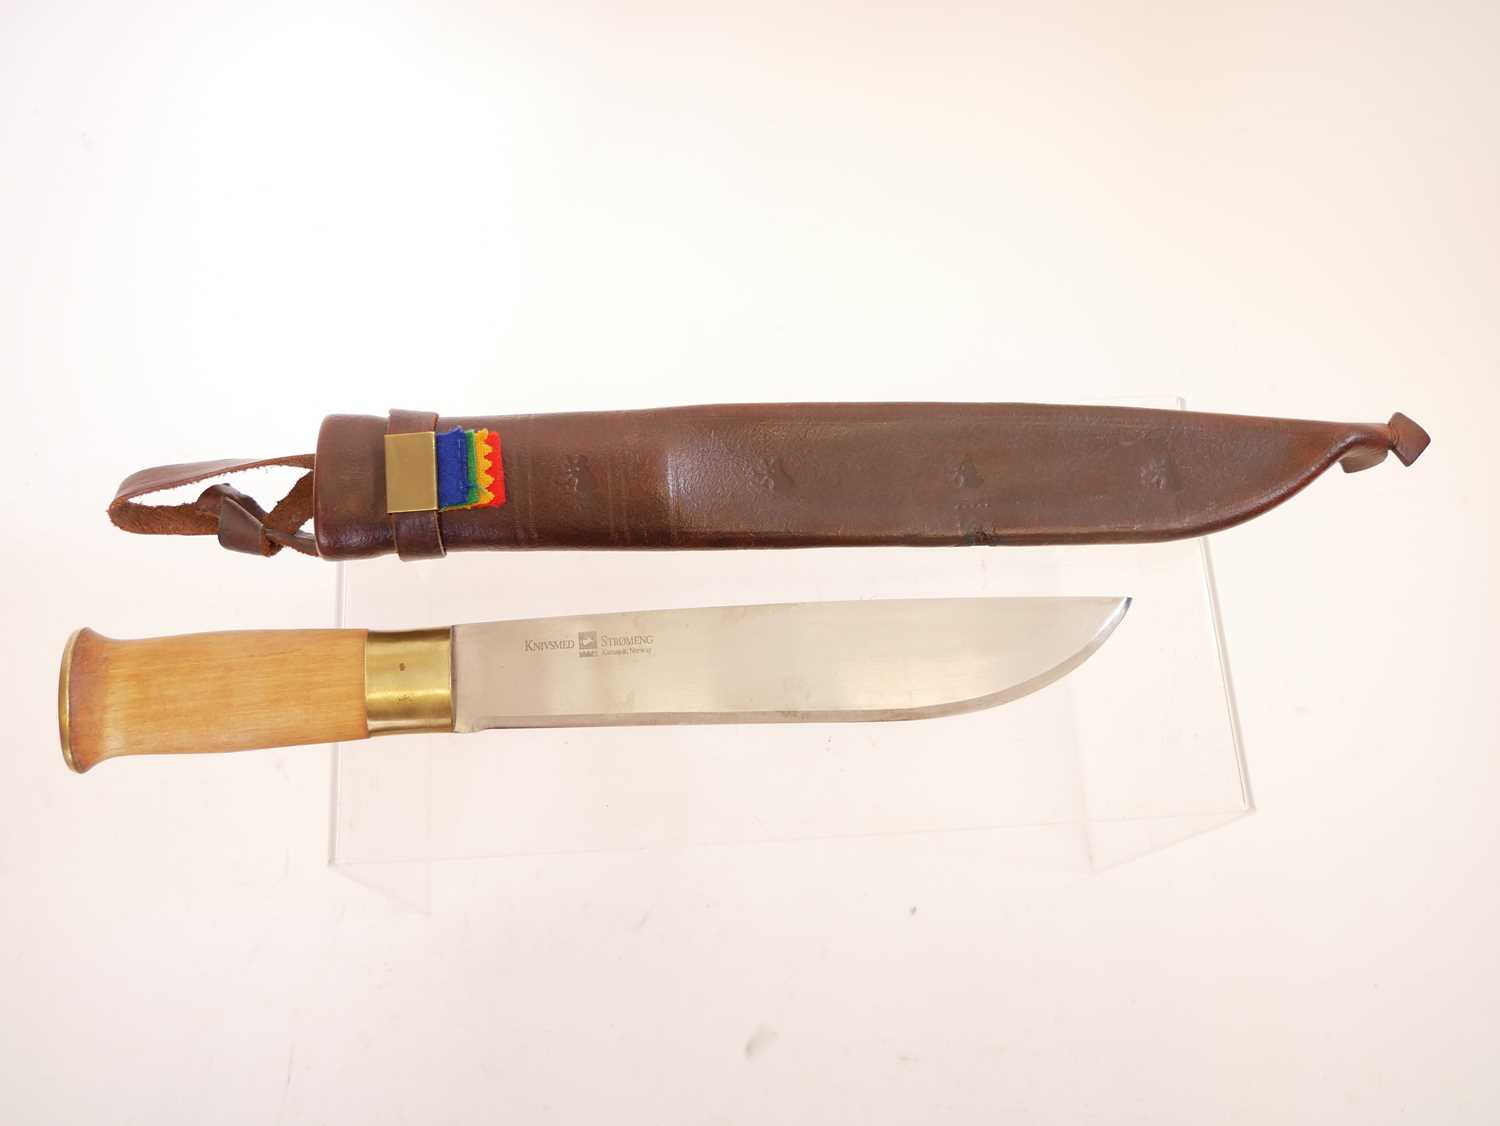 Knivsmed hunting knife, 9inch blade marked 'Knivsmed Stromeng Karasjok, Norway' with leather - Image 7 of 7